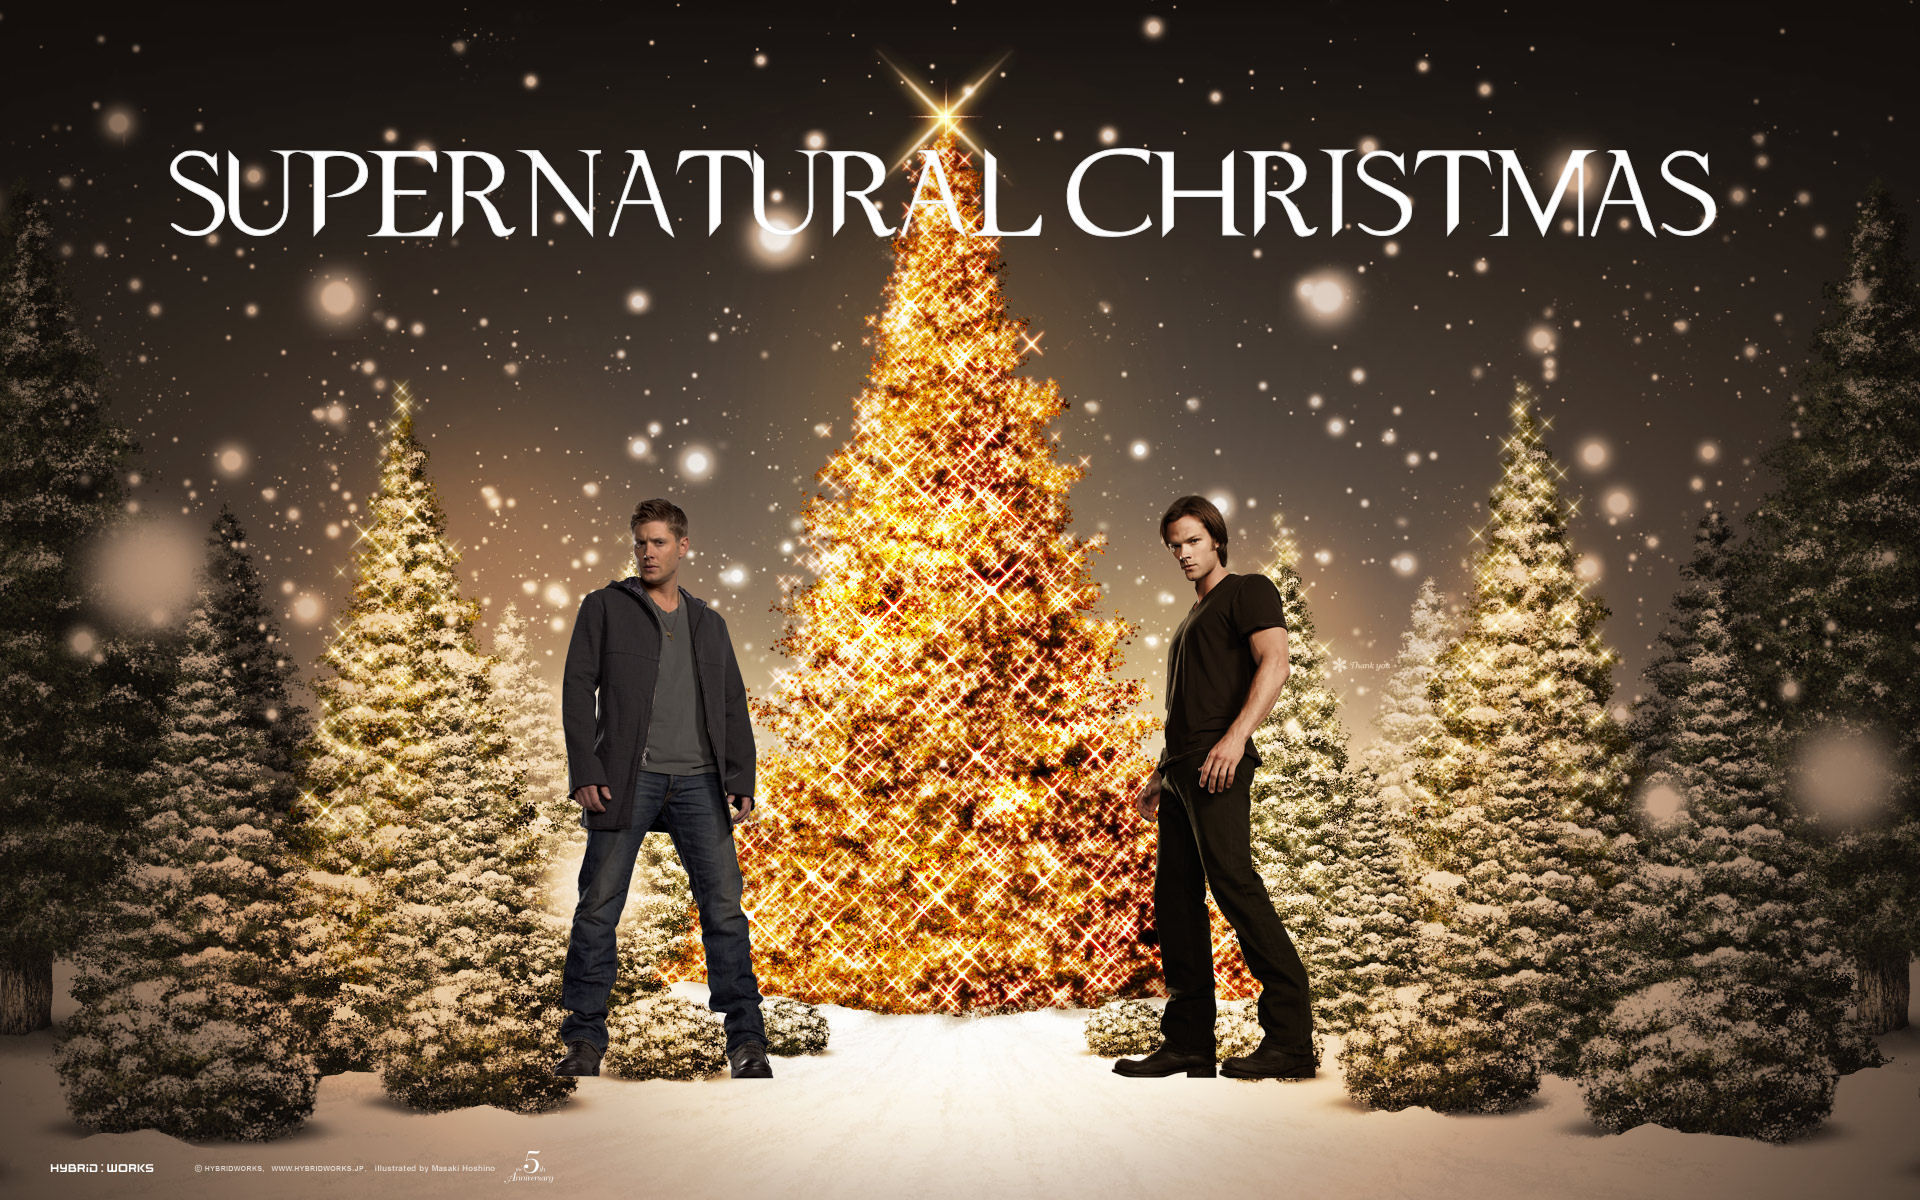 Supernatural Christmas - Christmas Tree Background Mac - HD Wallpaper 